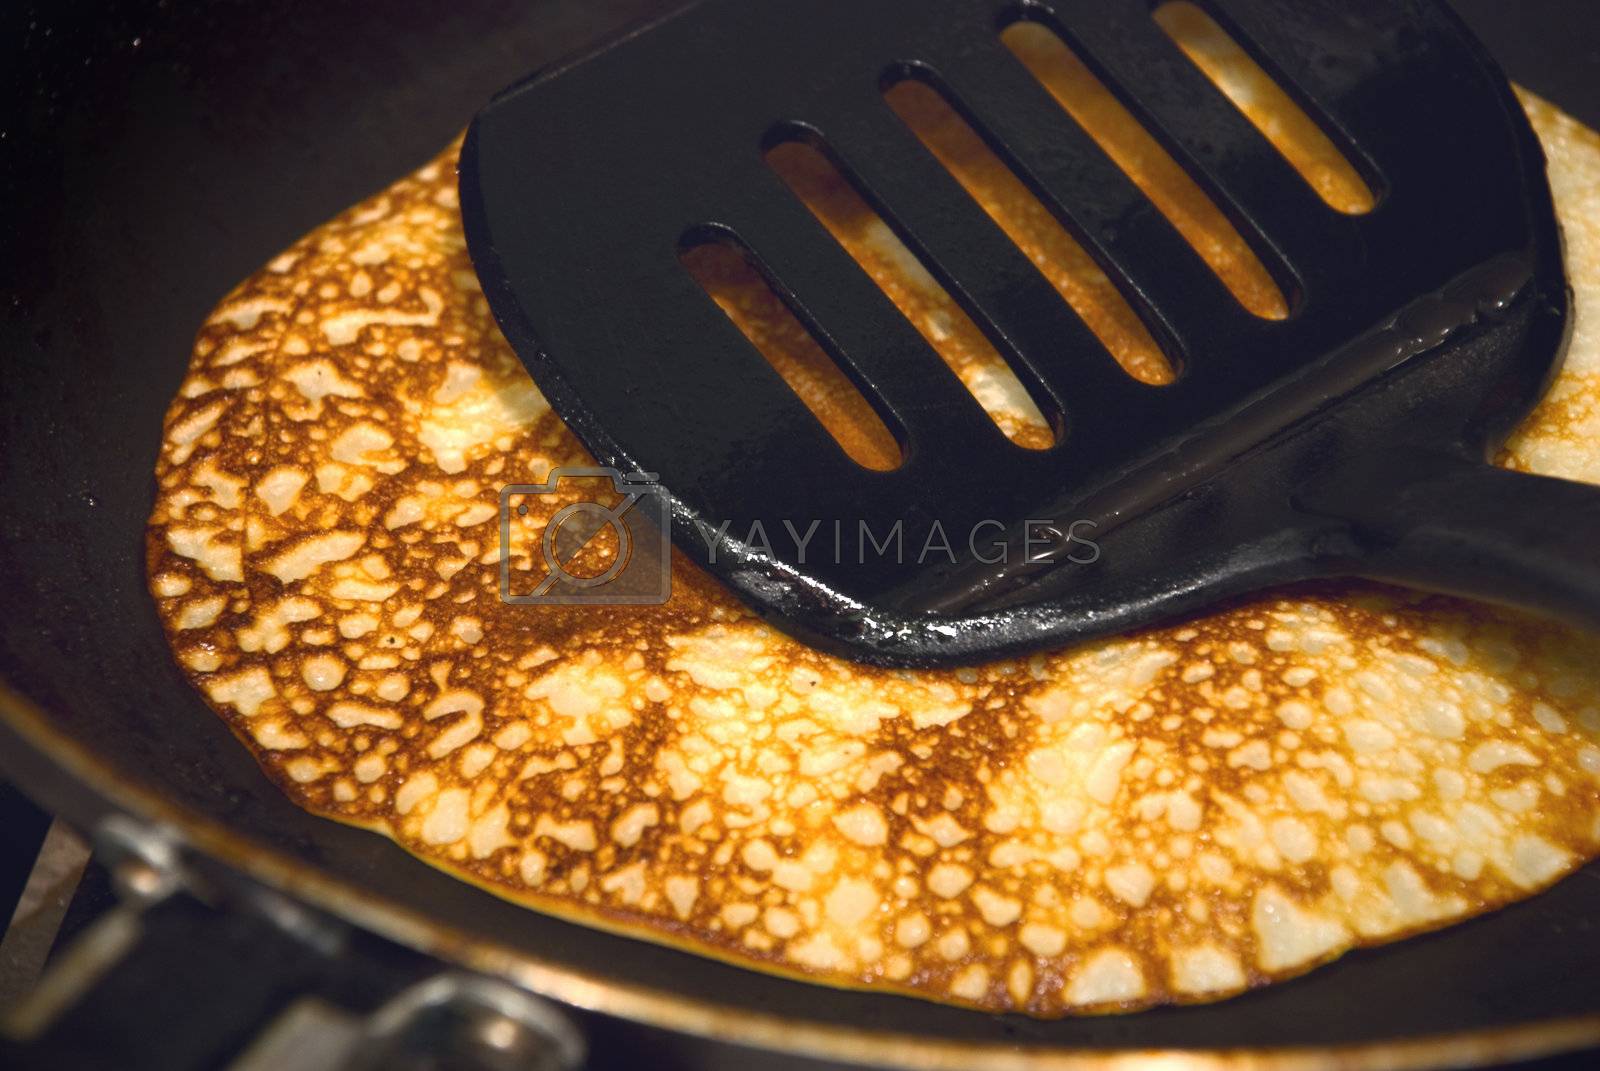 Royalty free image of pancakes by jannyjus